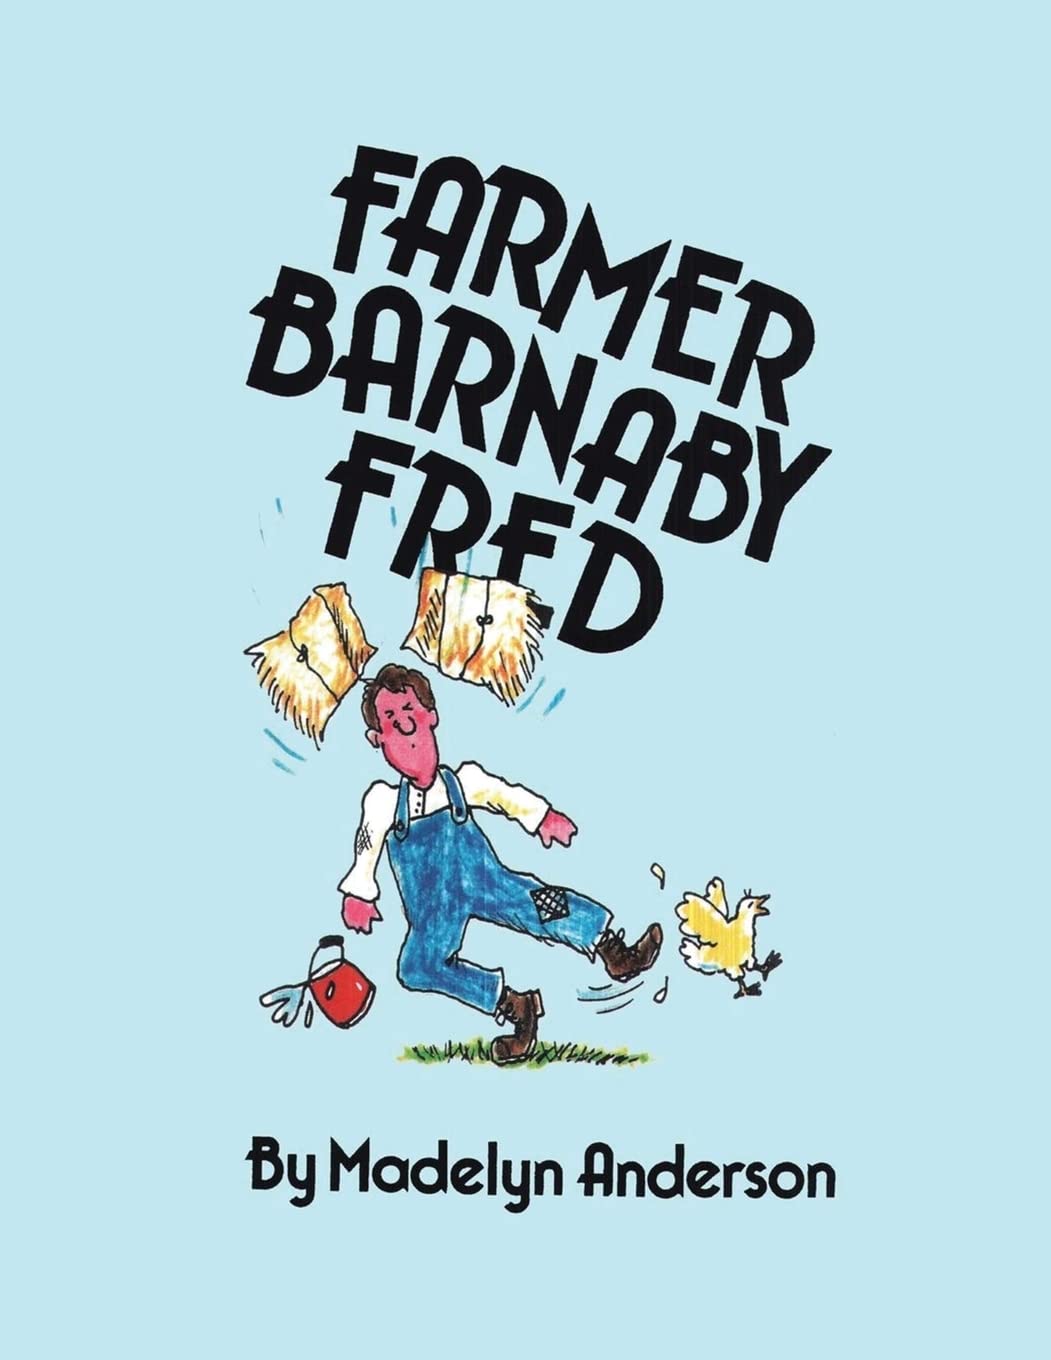 Author's Tranquility Press presents: Farmer Barnaby Fred - A Hilarious Tale of Barnyard Mayhem